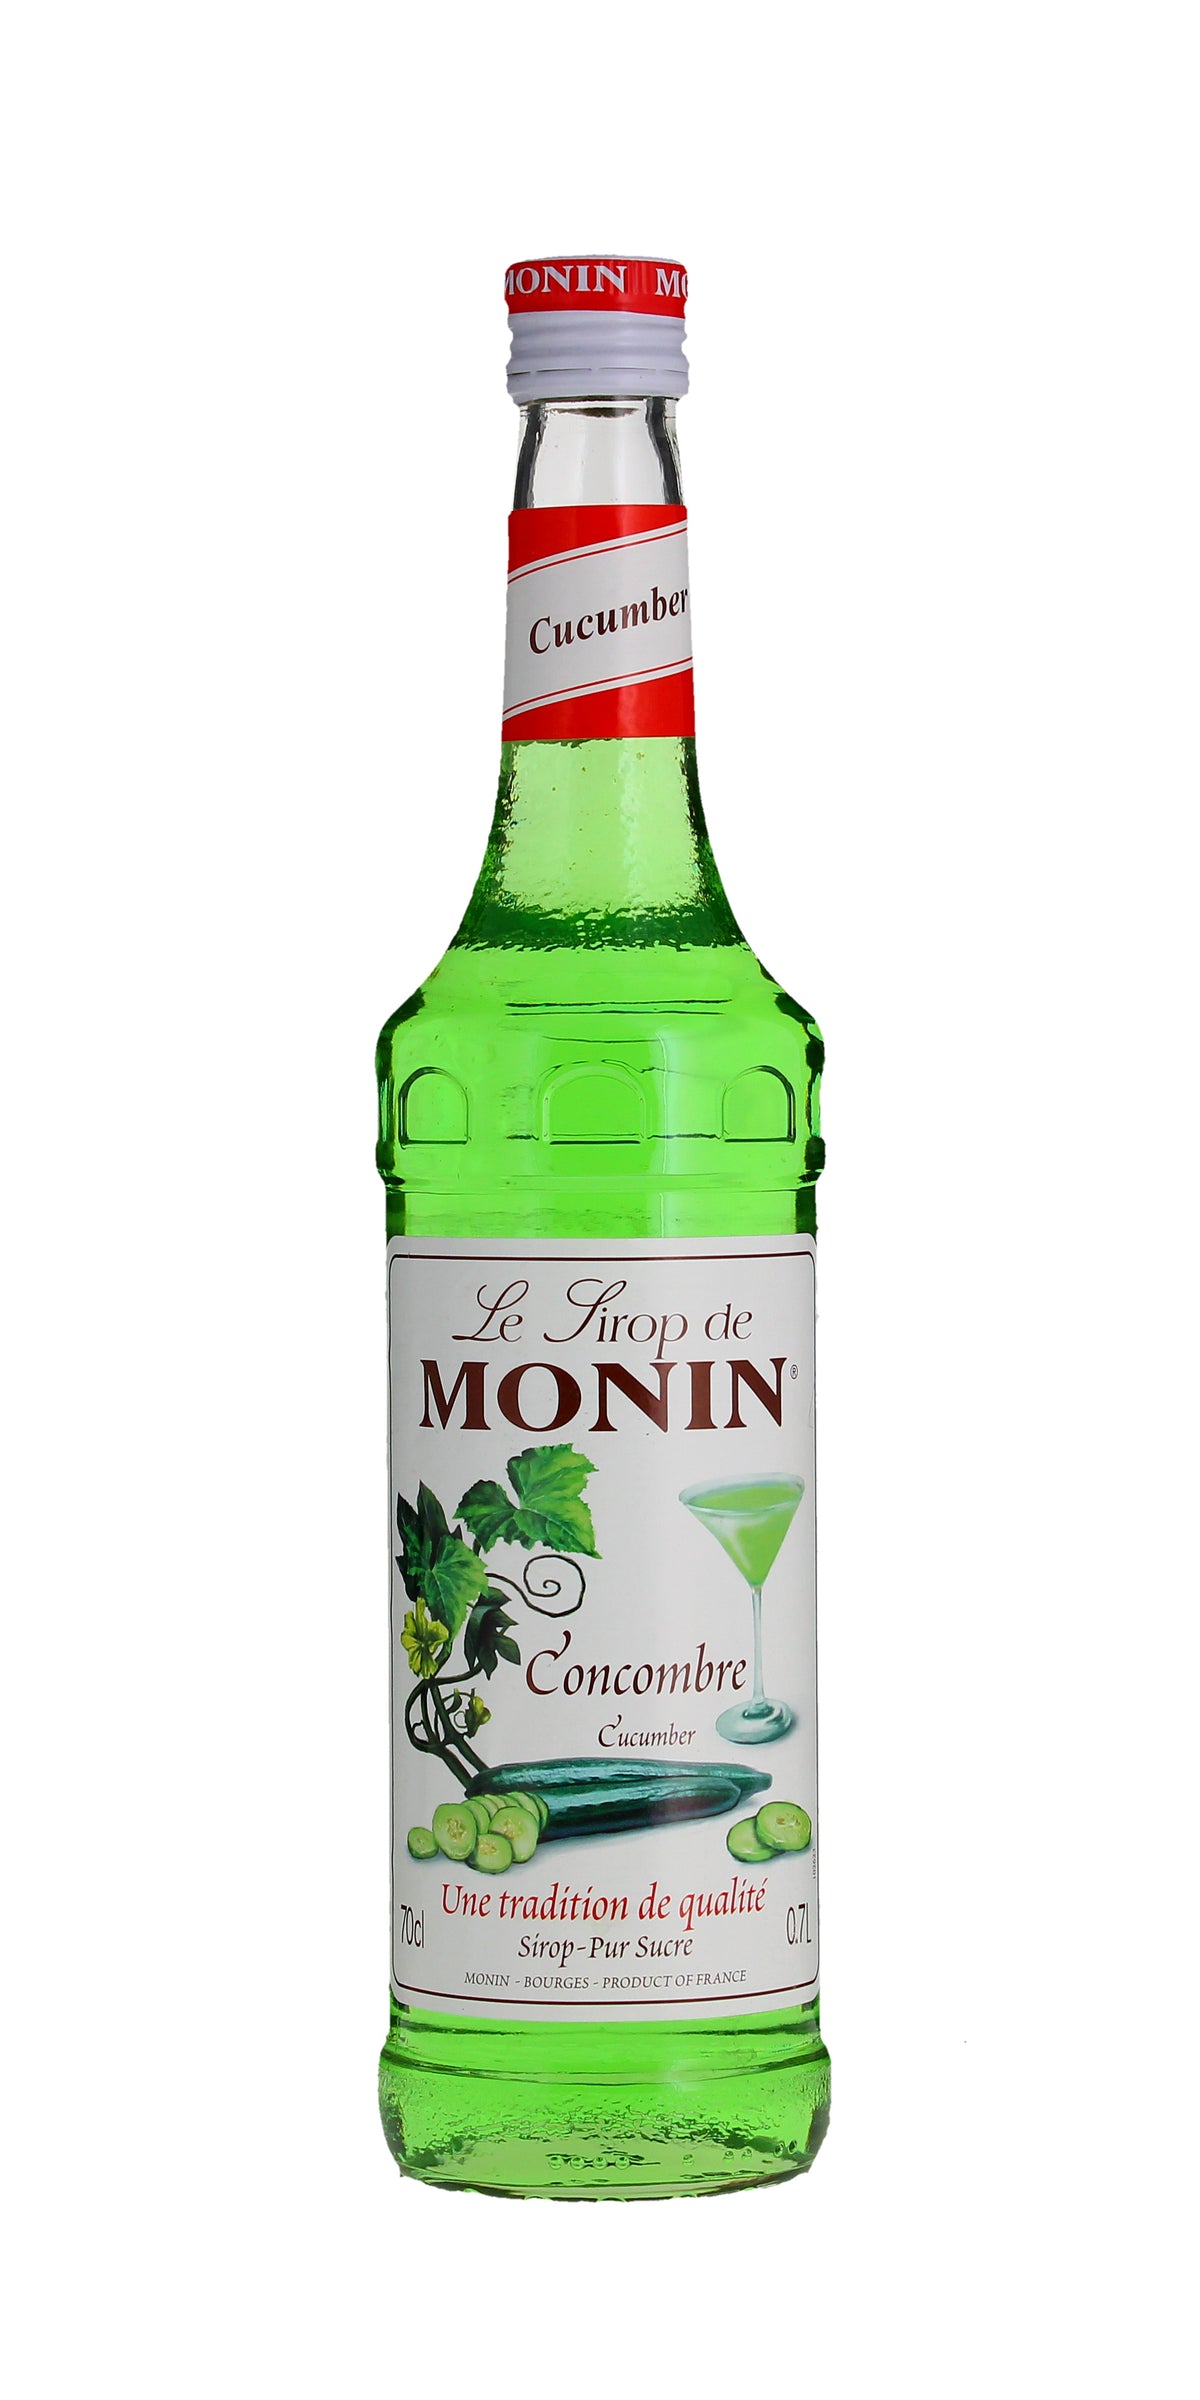 Monin Sirop de Concombre - Cucumber Syrup, France